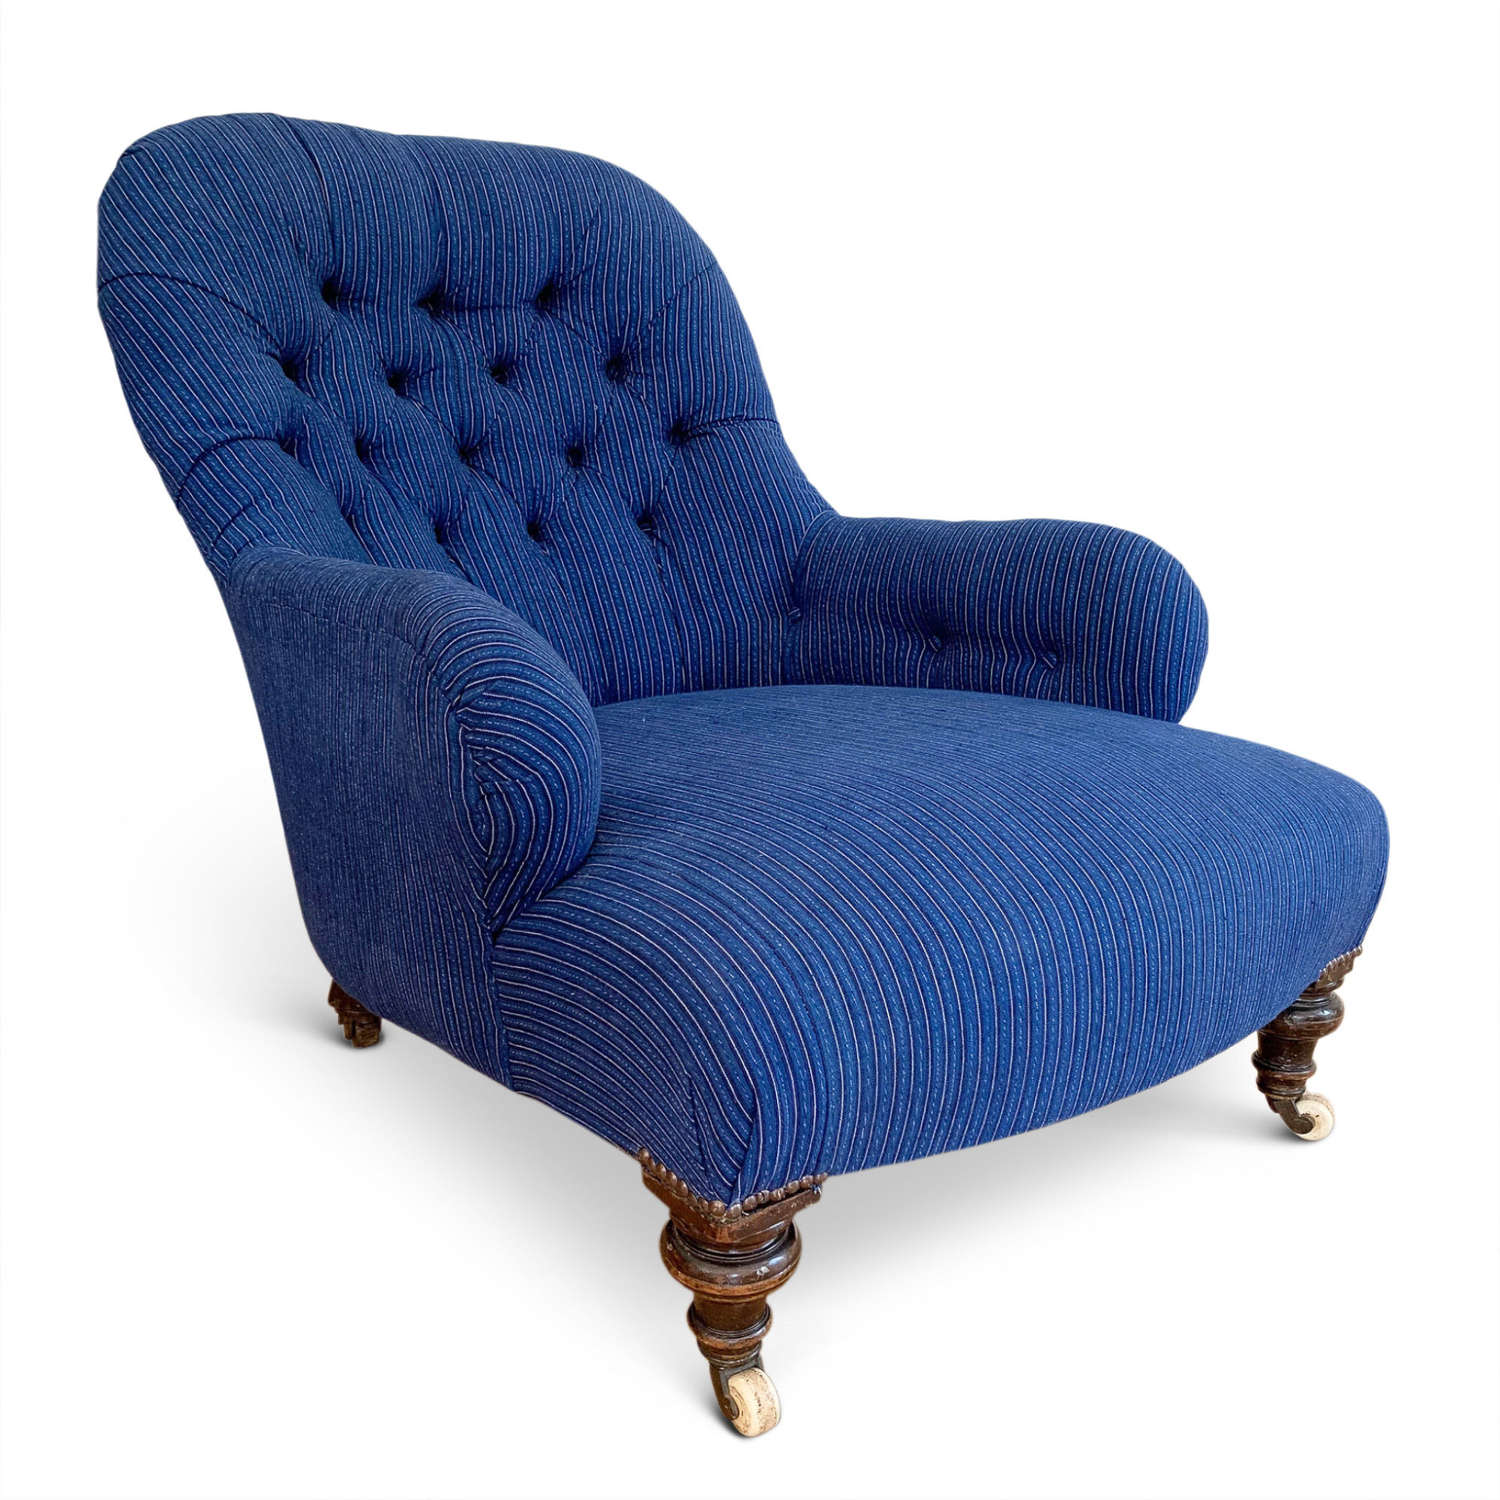 Deep seated Victorian armchair